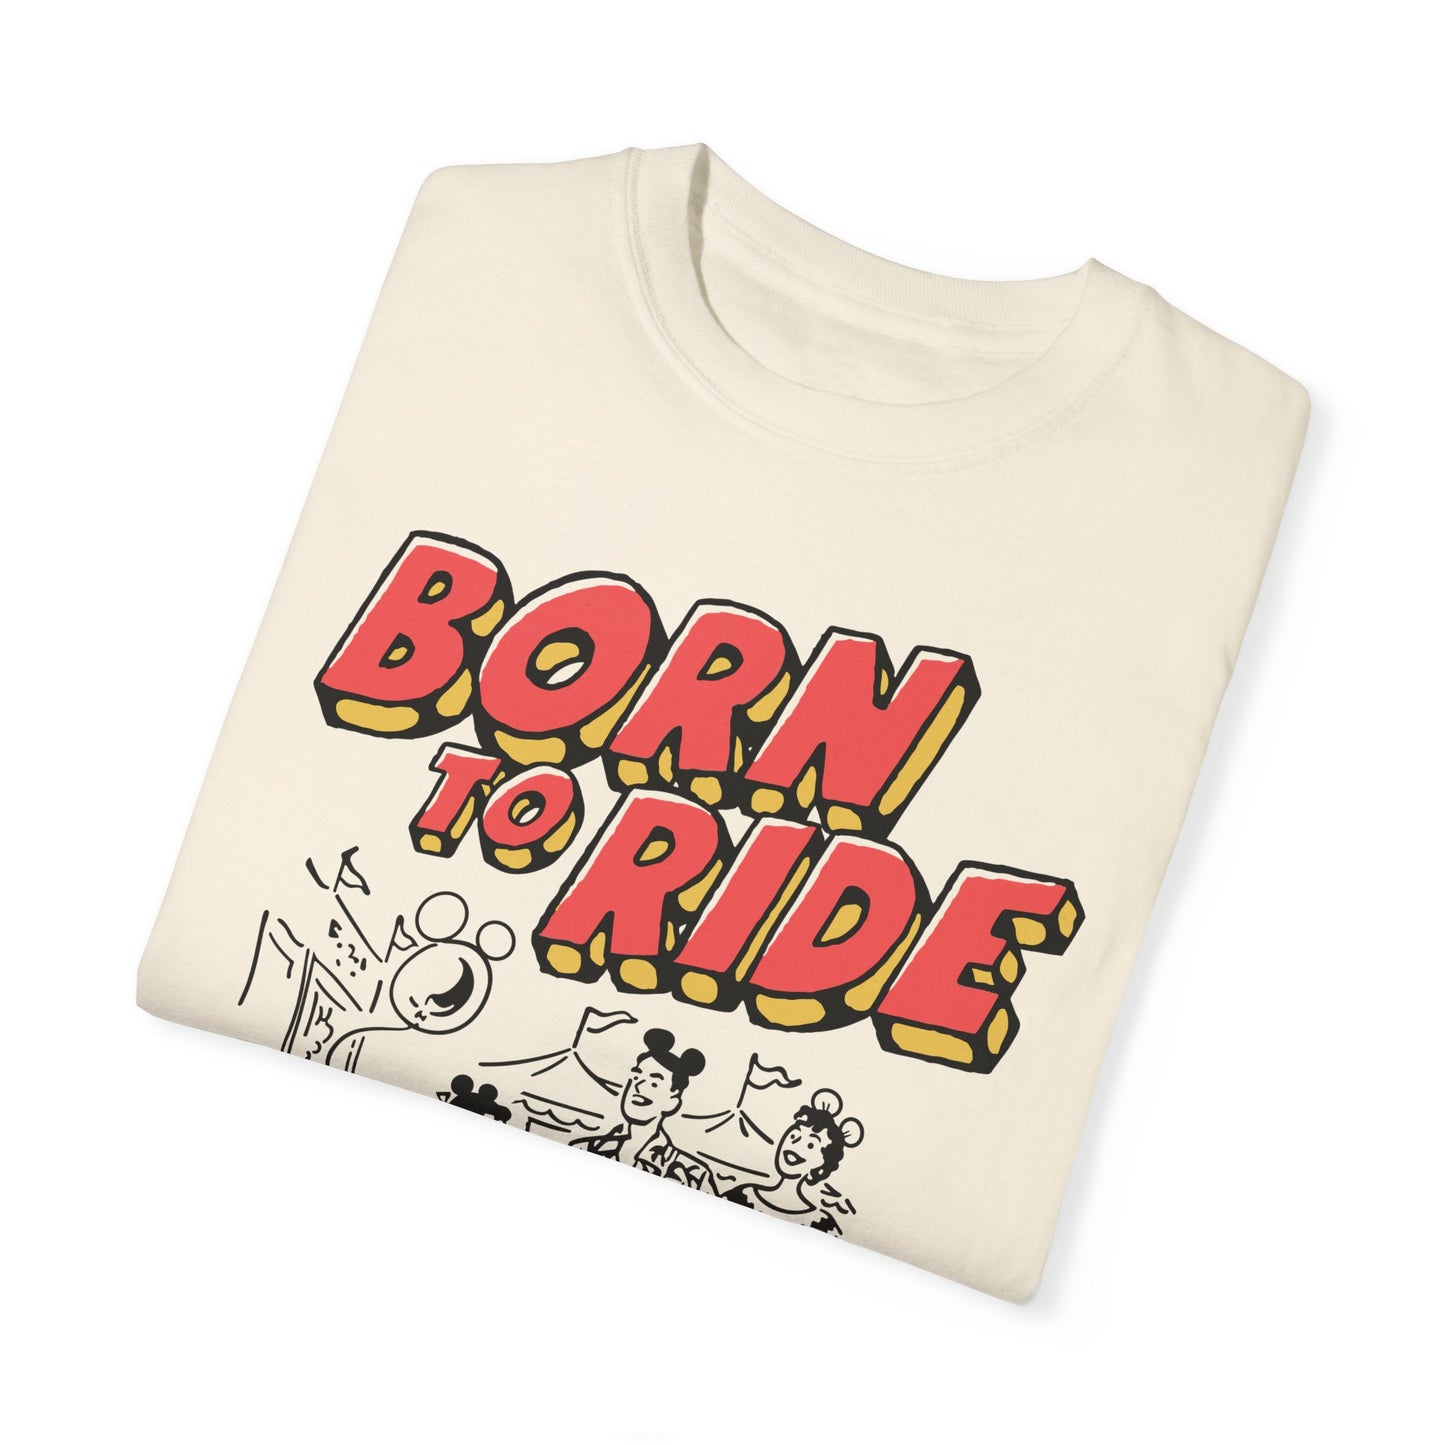 Born to Ride - Tee